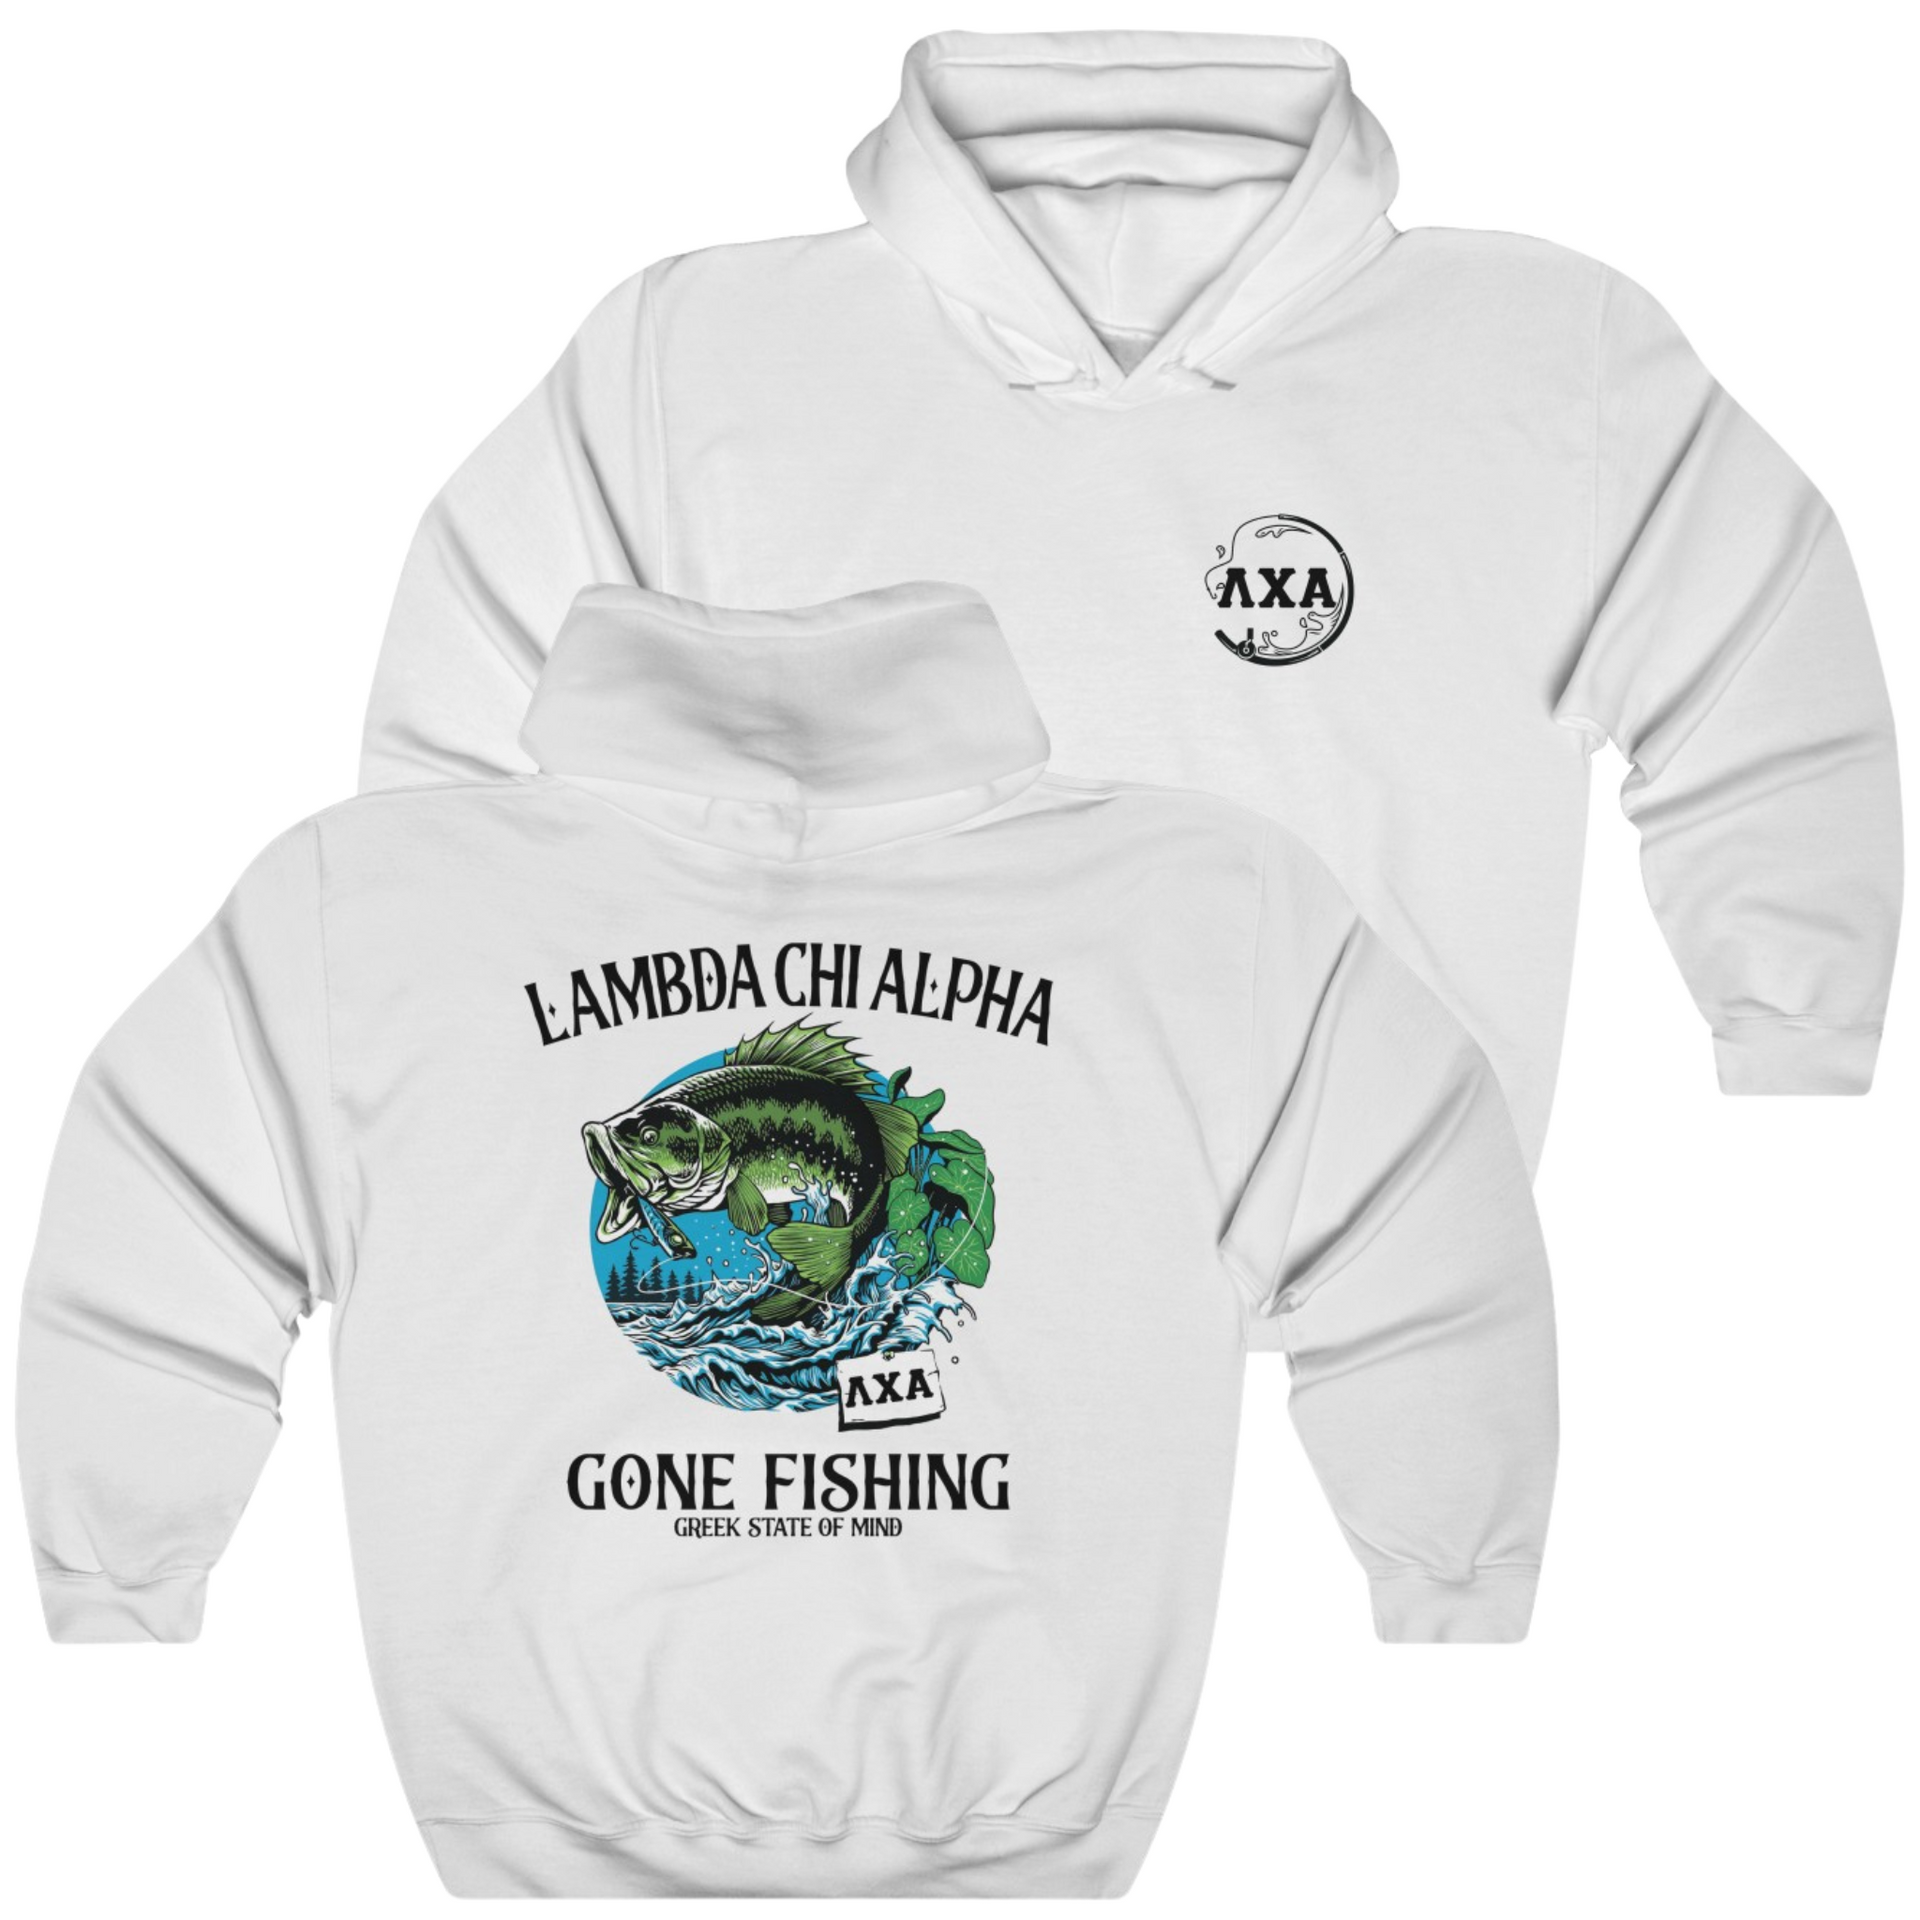 White Lambda Chi Alpha Graphic Hoodie | Gone Fishing | Lambda Chi Alpha Fraternity Apparel 